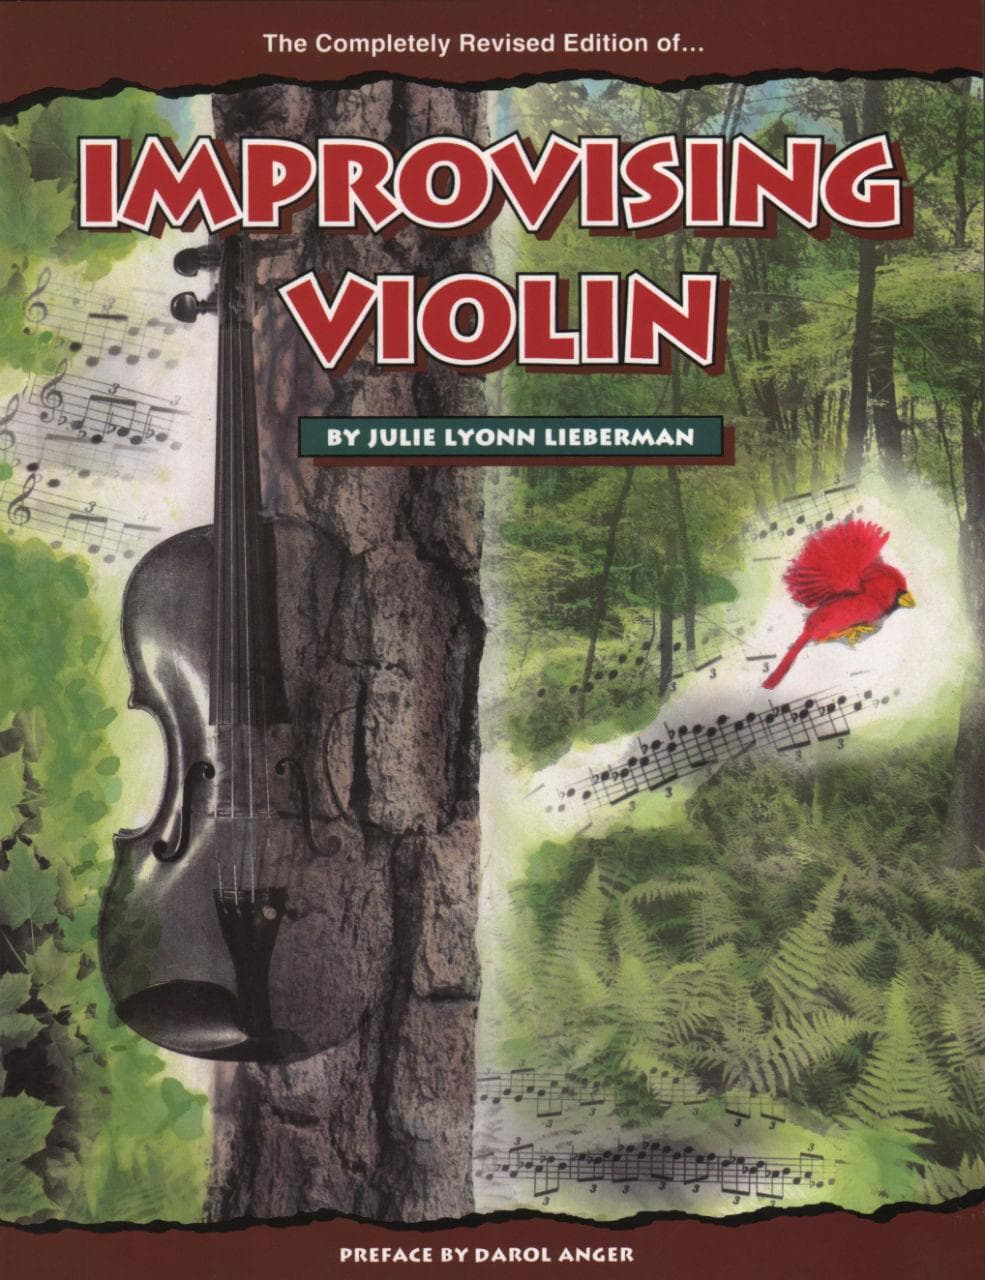 Lieberman, Julie Lyonn - Improvising Violin - Hal Leonard Edition